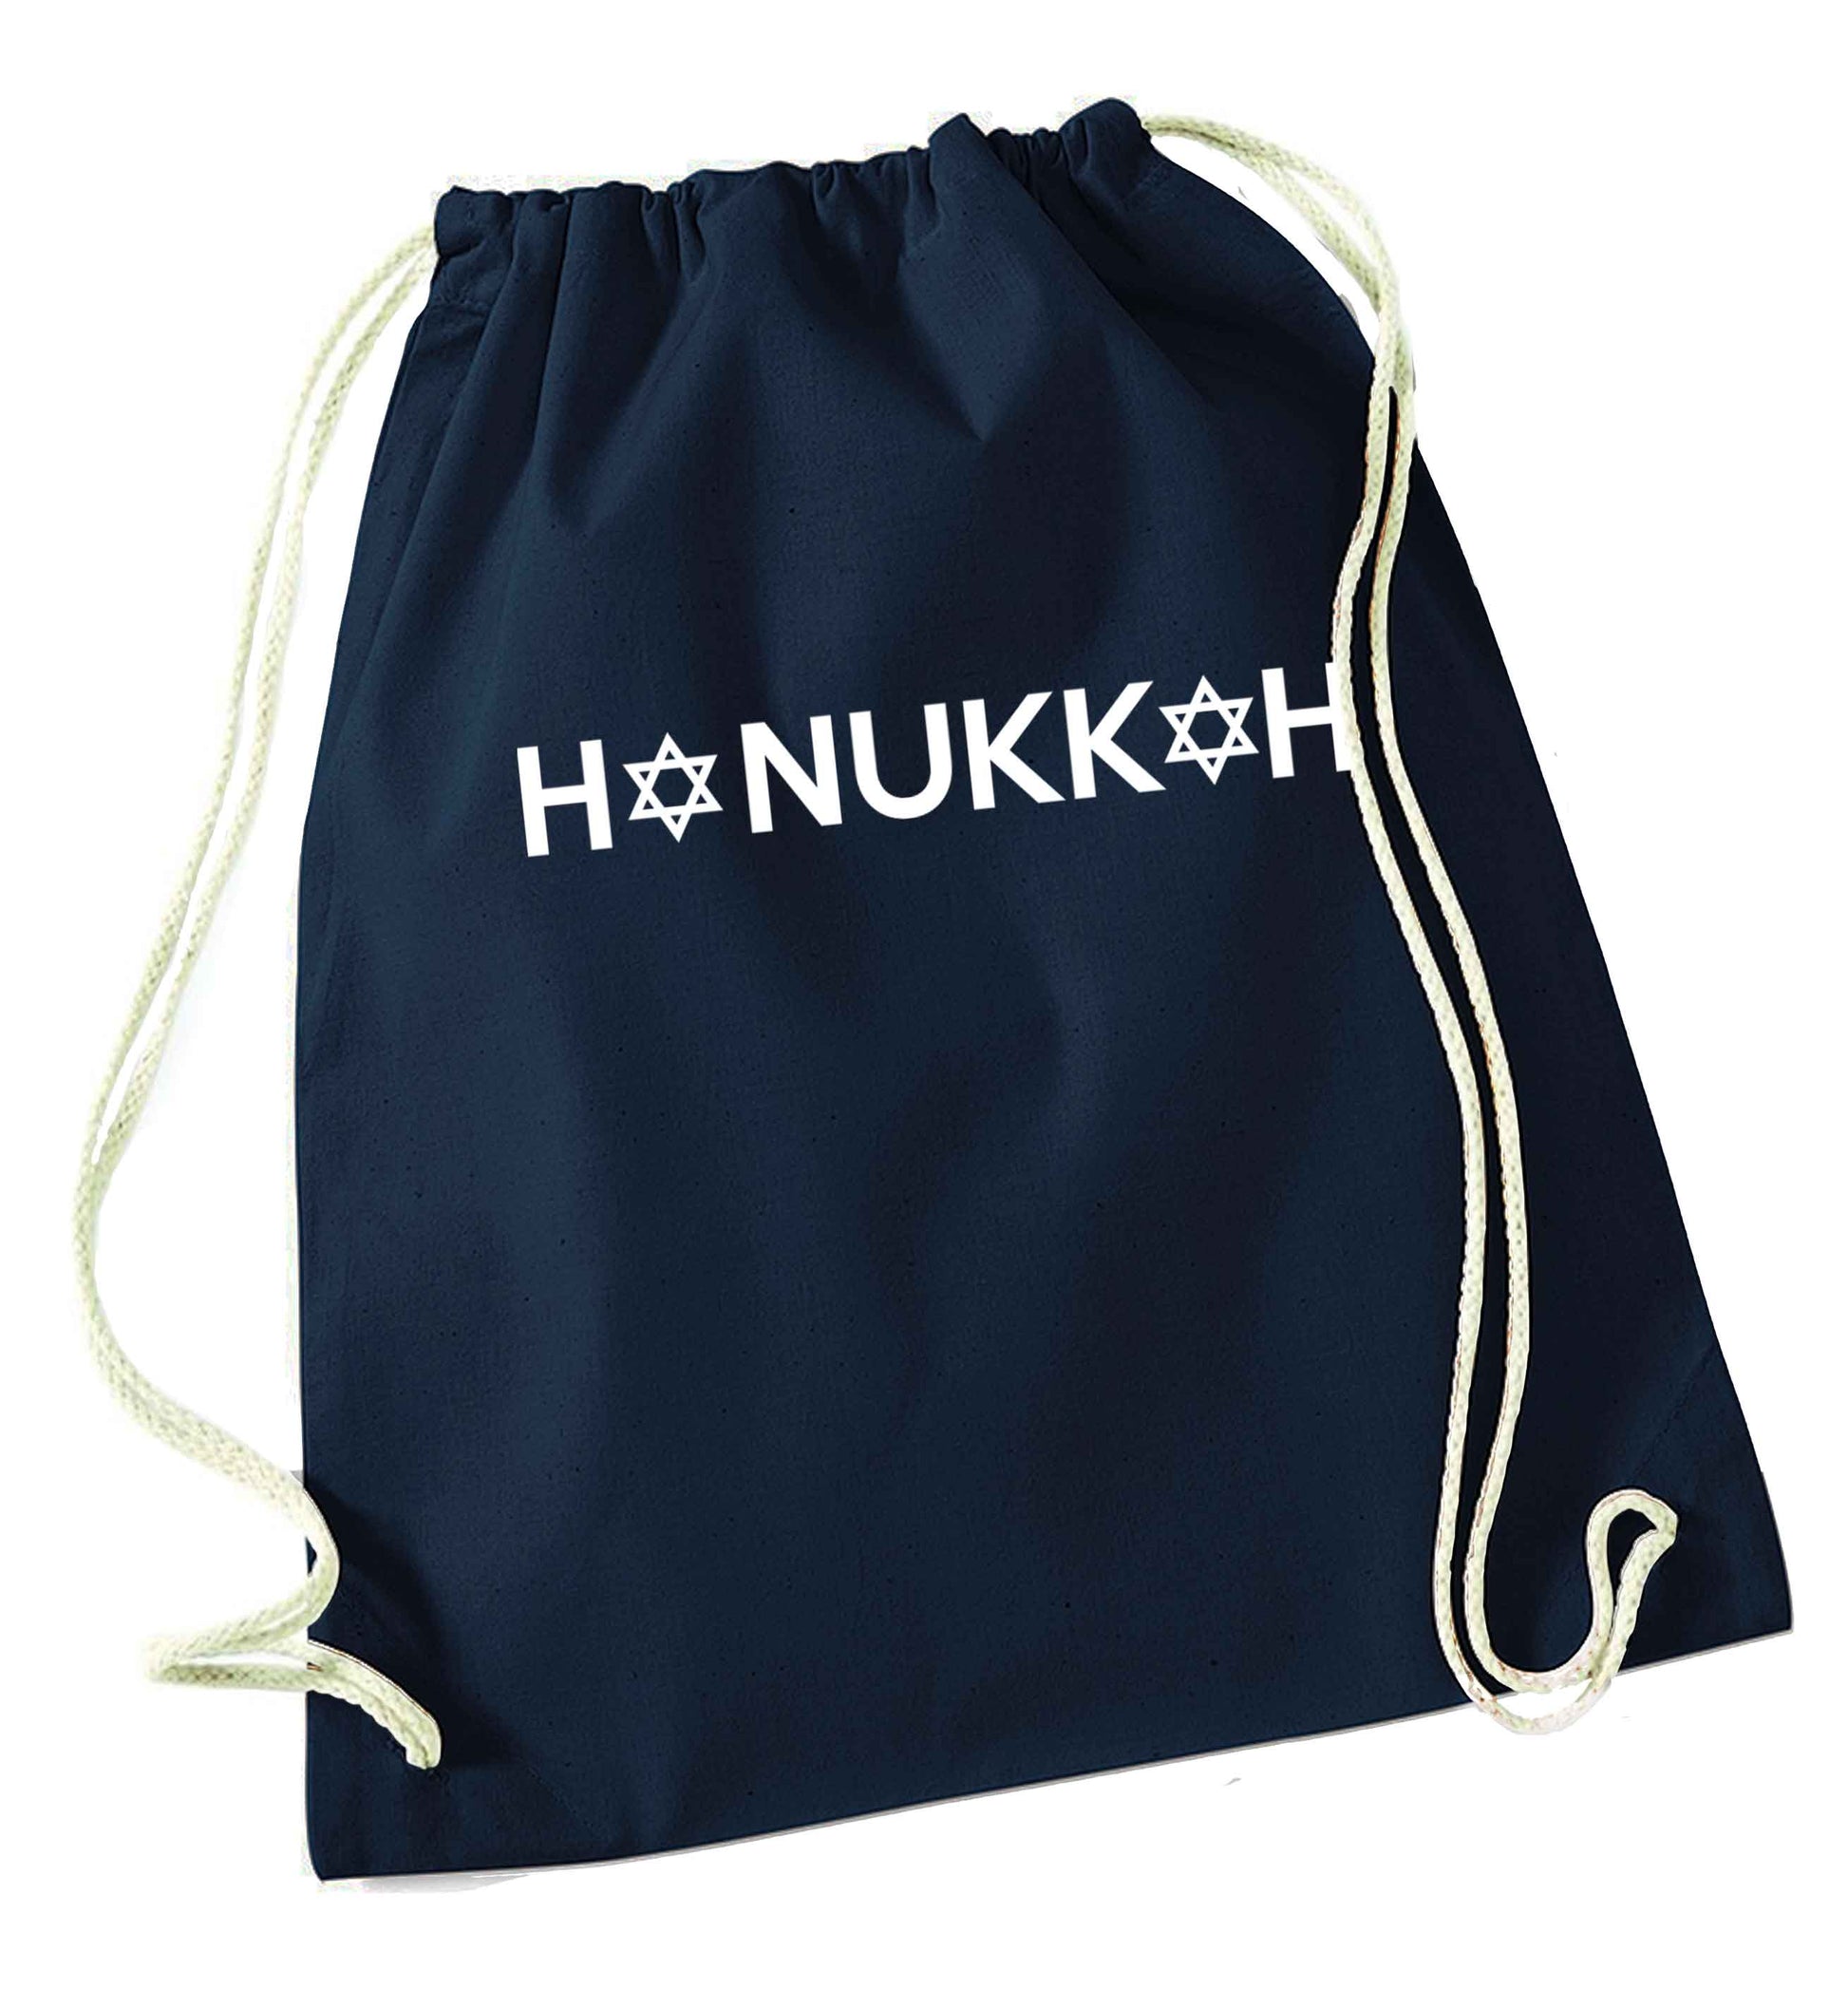 Hanukkah star of david navy drawstring bag